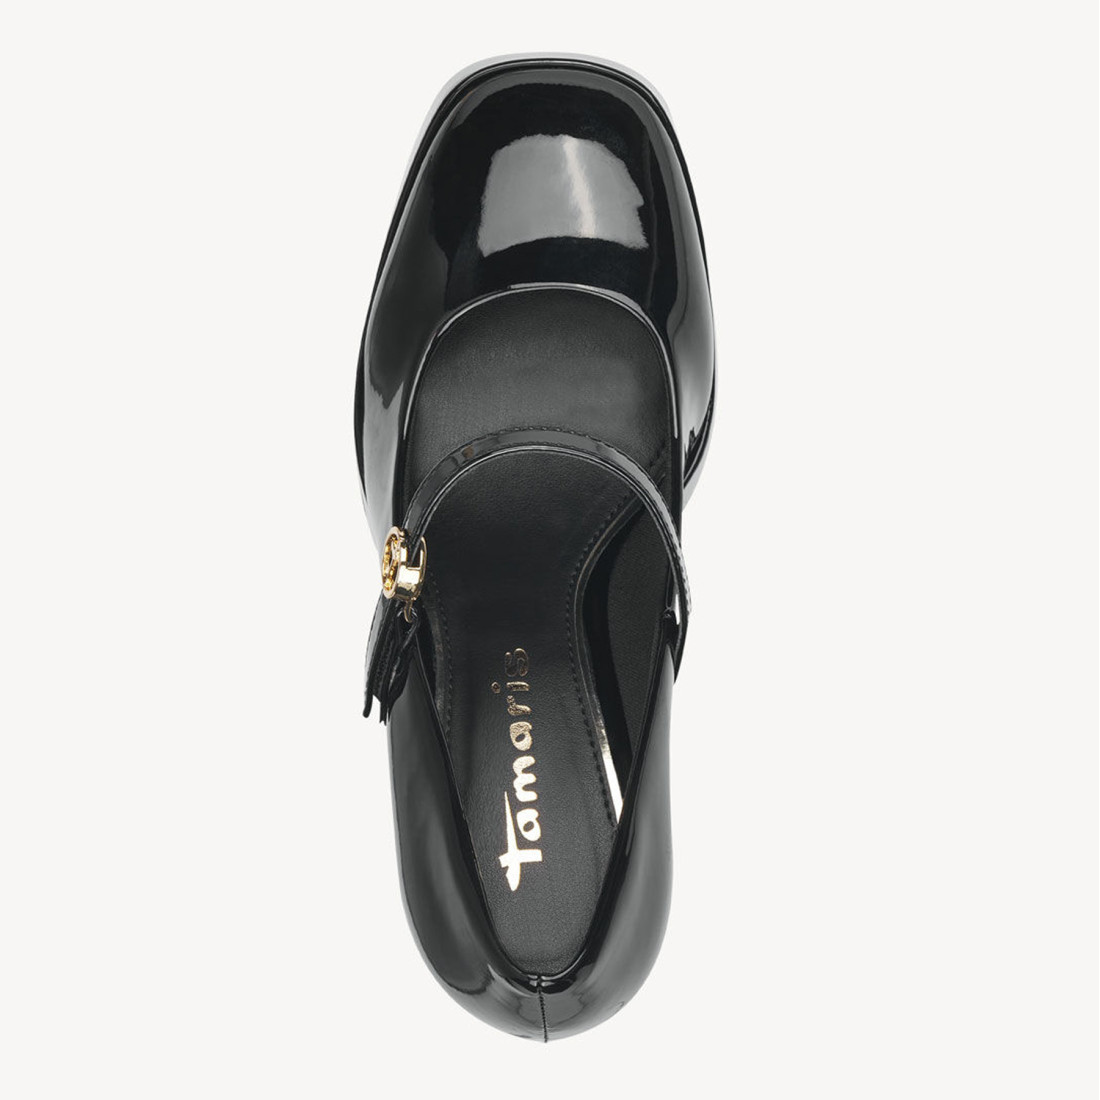 Grand gallon Primitiv Tamaris shiny black platform shoe with strap